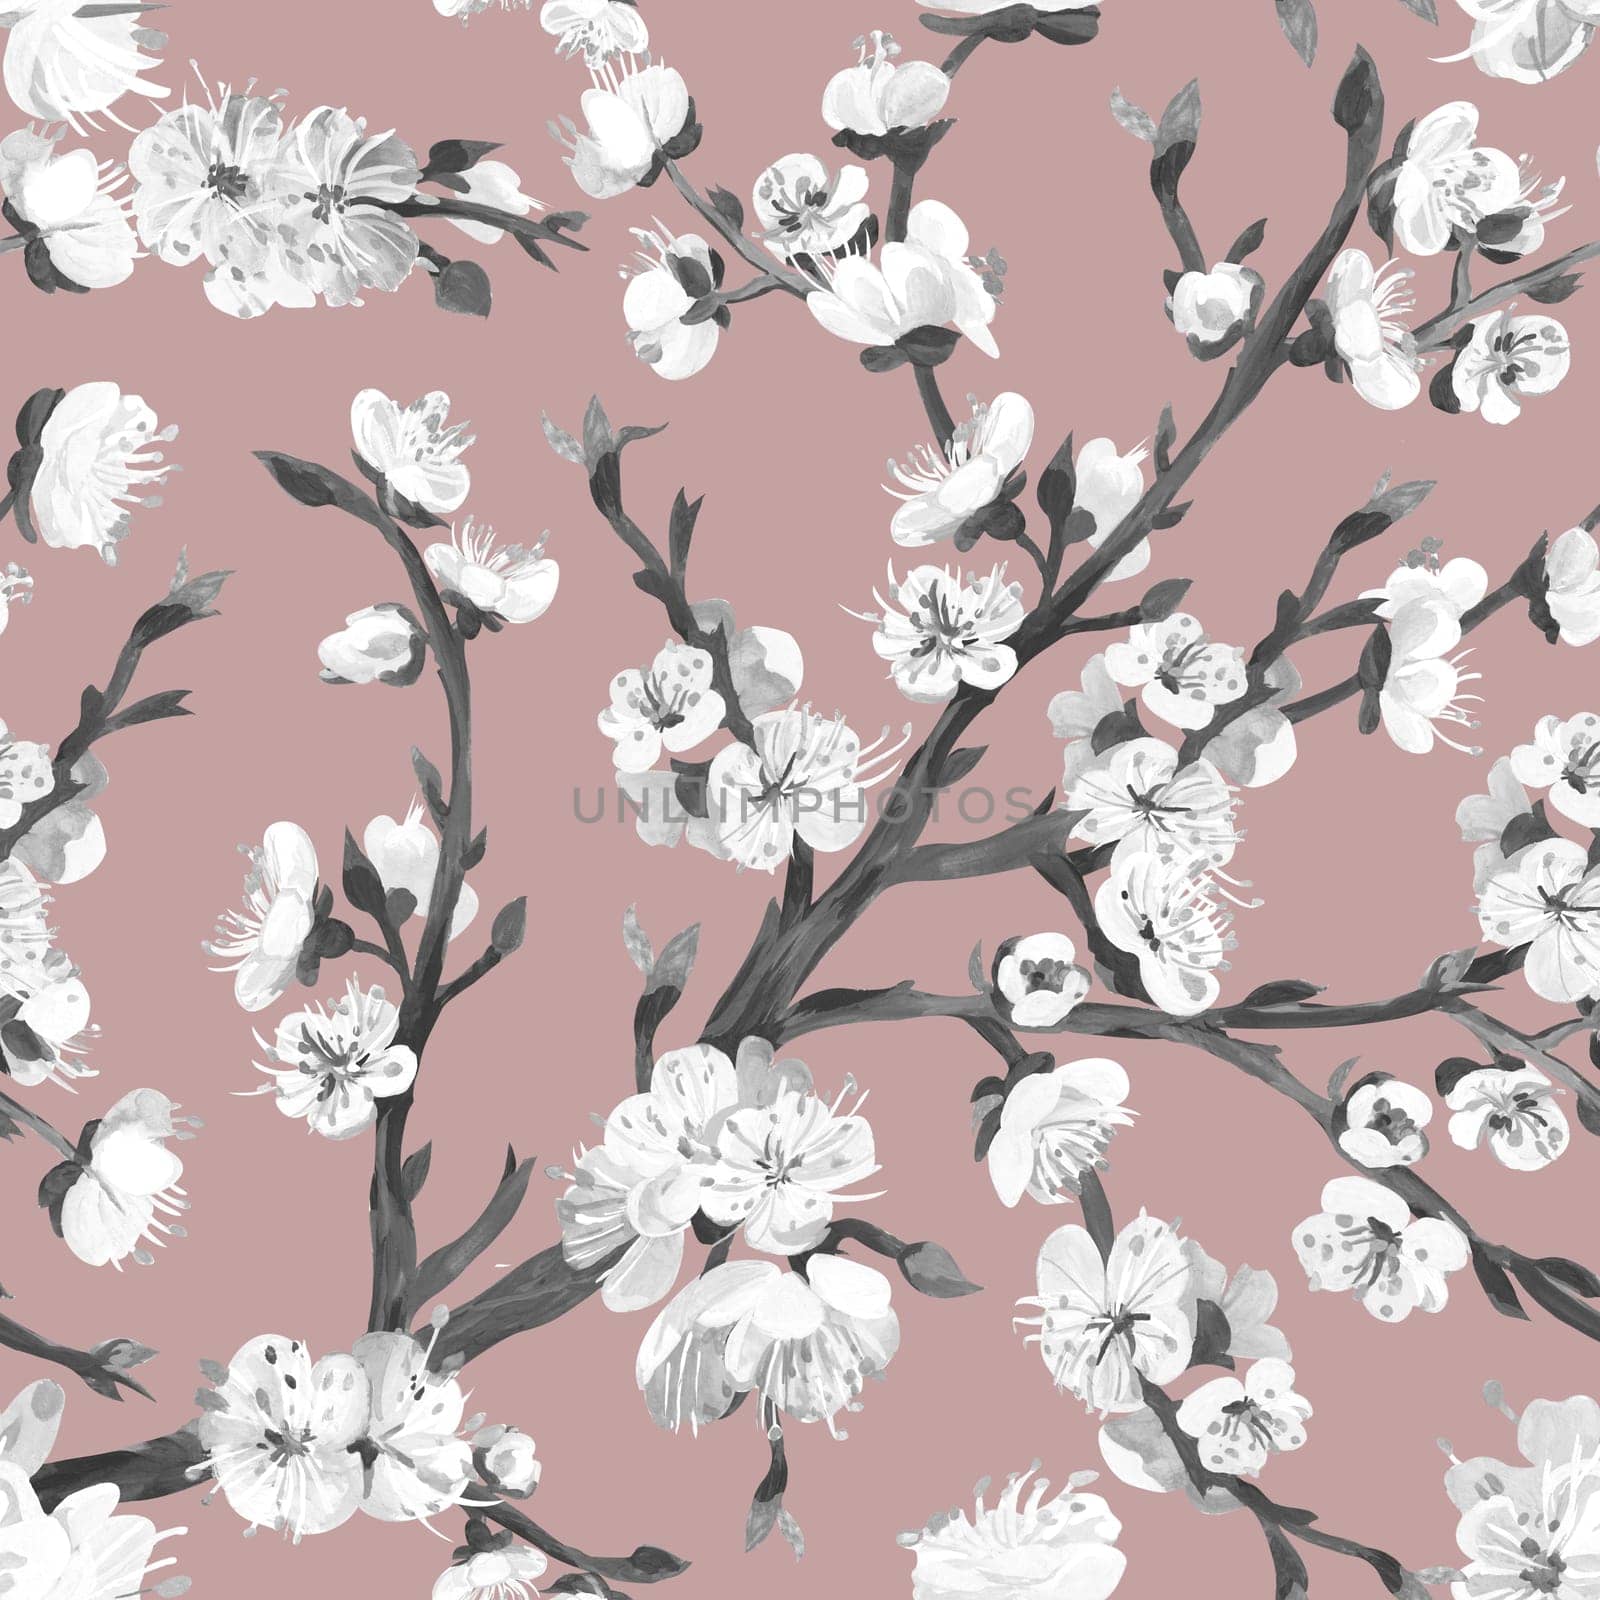 Botanical black and white seamless pattern with sakura cherry branch drawn for textile